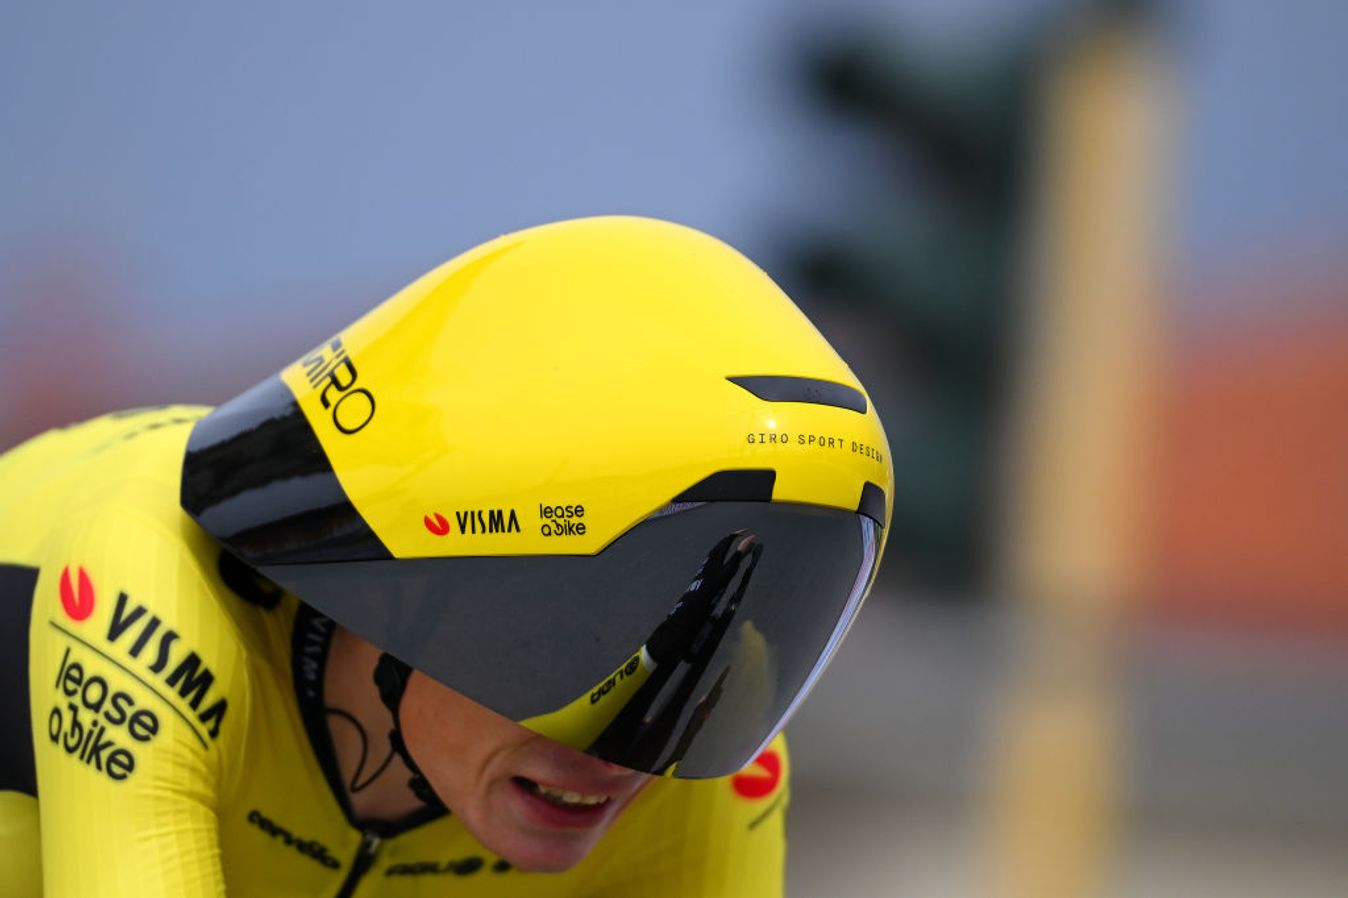 A closer look at the new Giro helmet